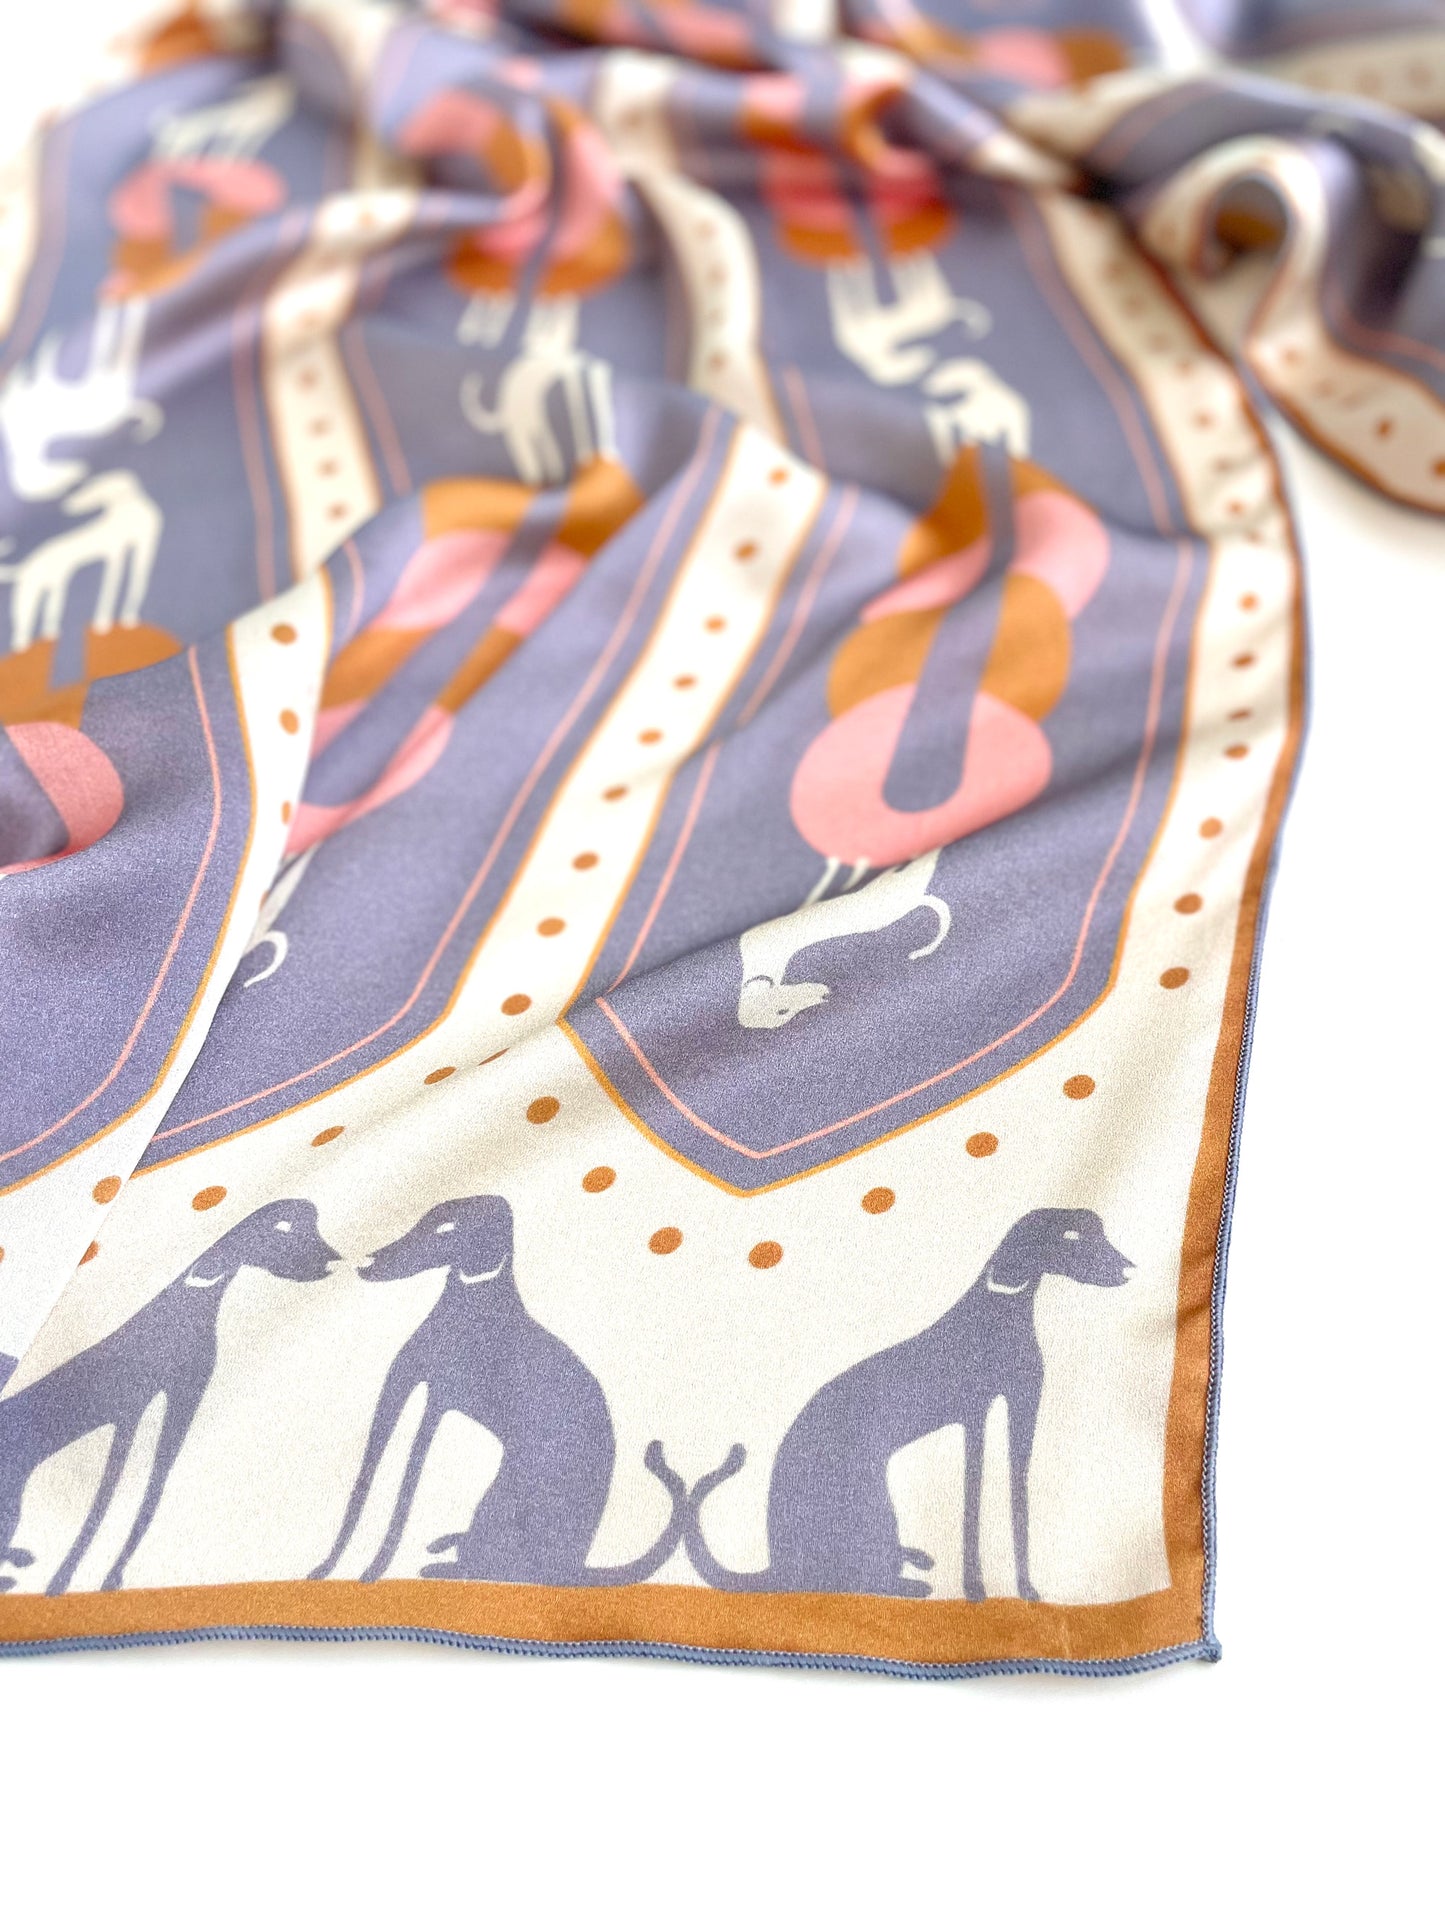 Watchdog - Dog scarf in lavender art deco print